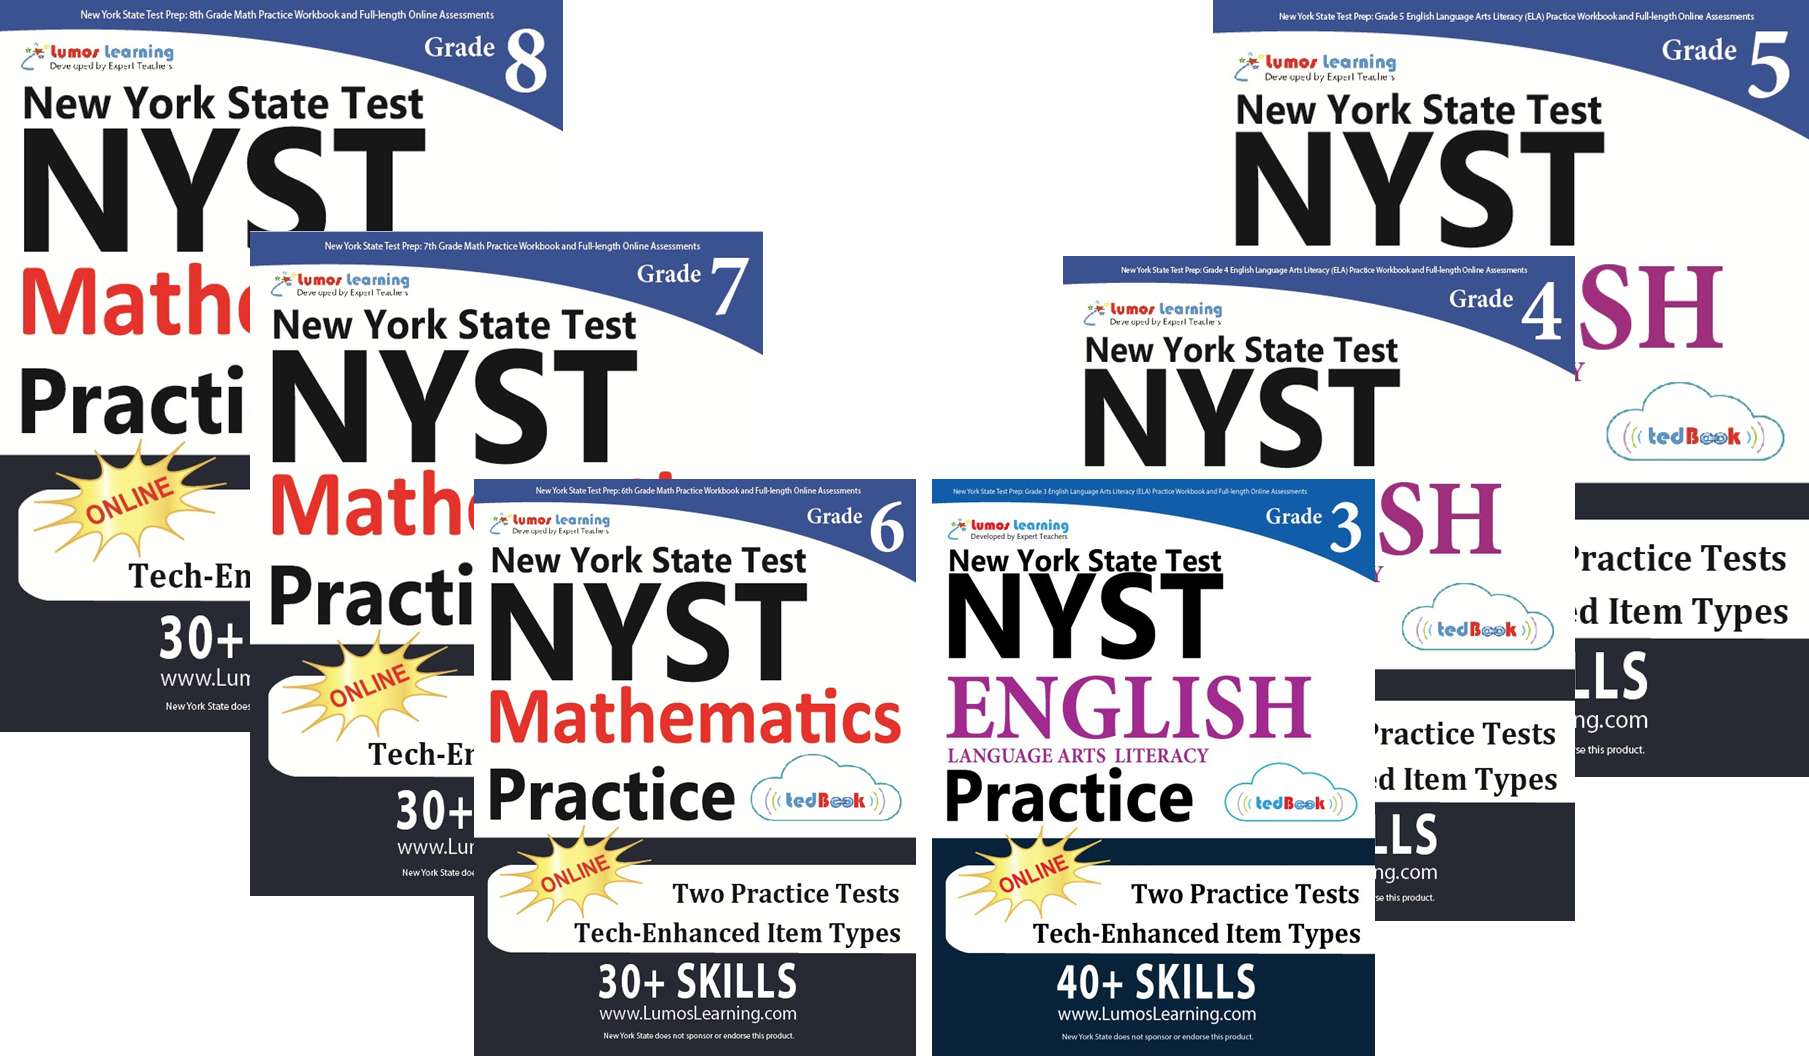 Lumos New York State Test Practice tedbook (NYST) Lumos Learning